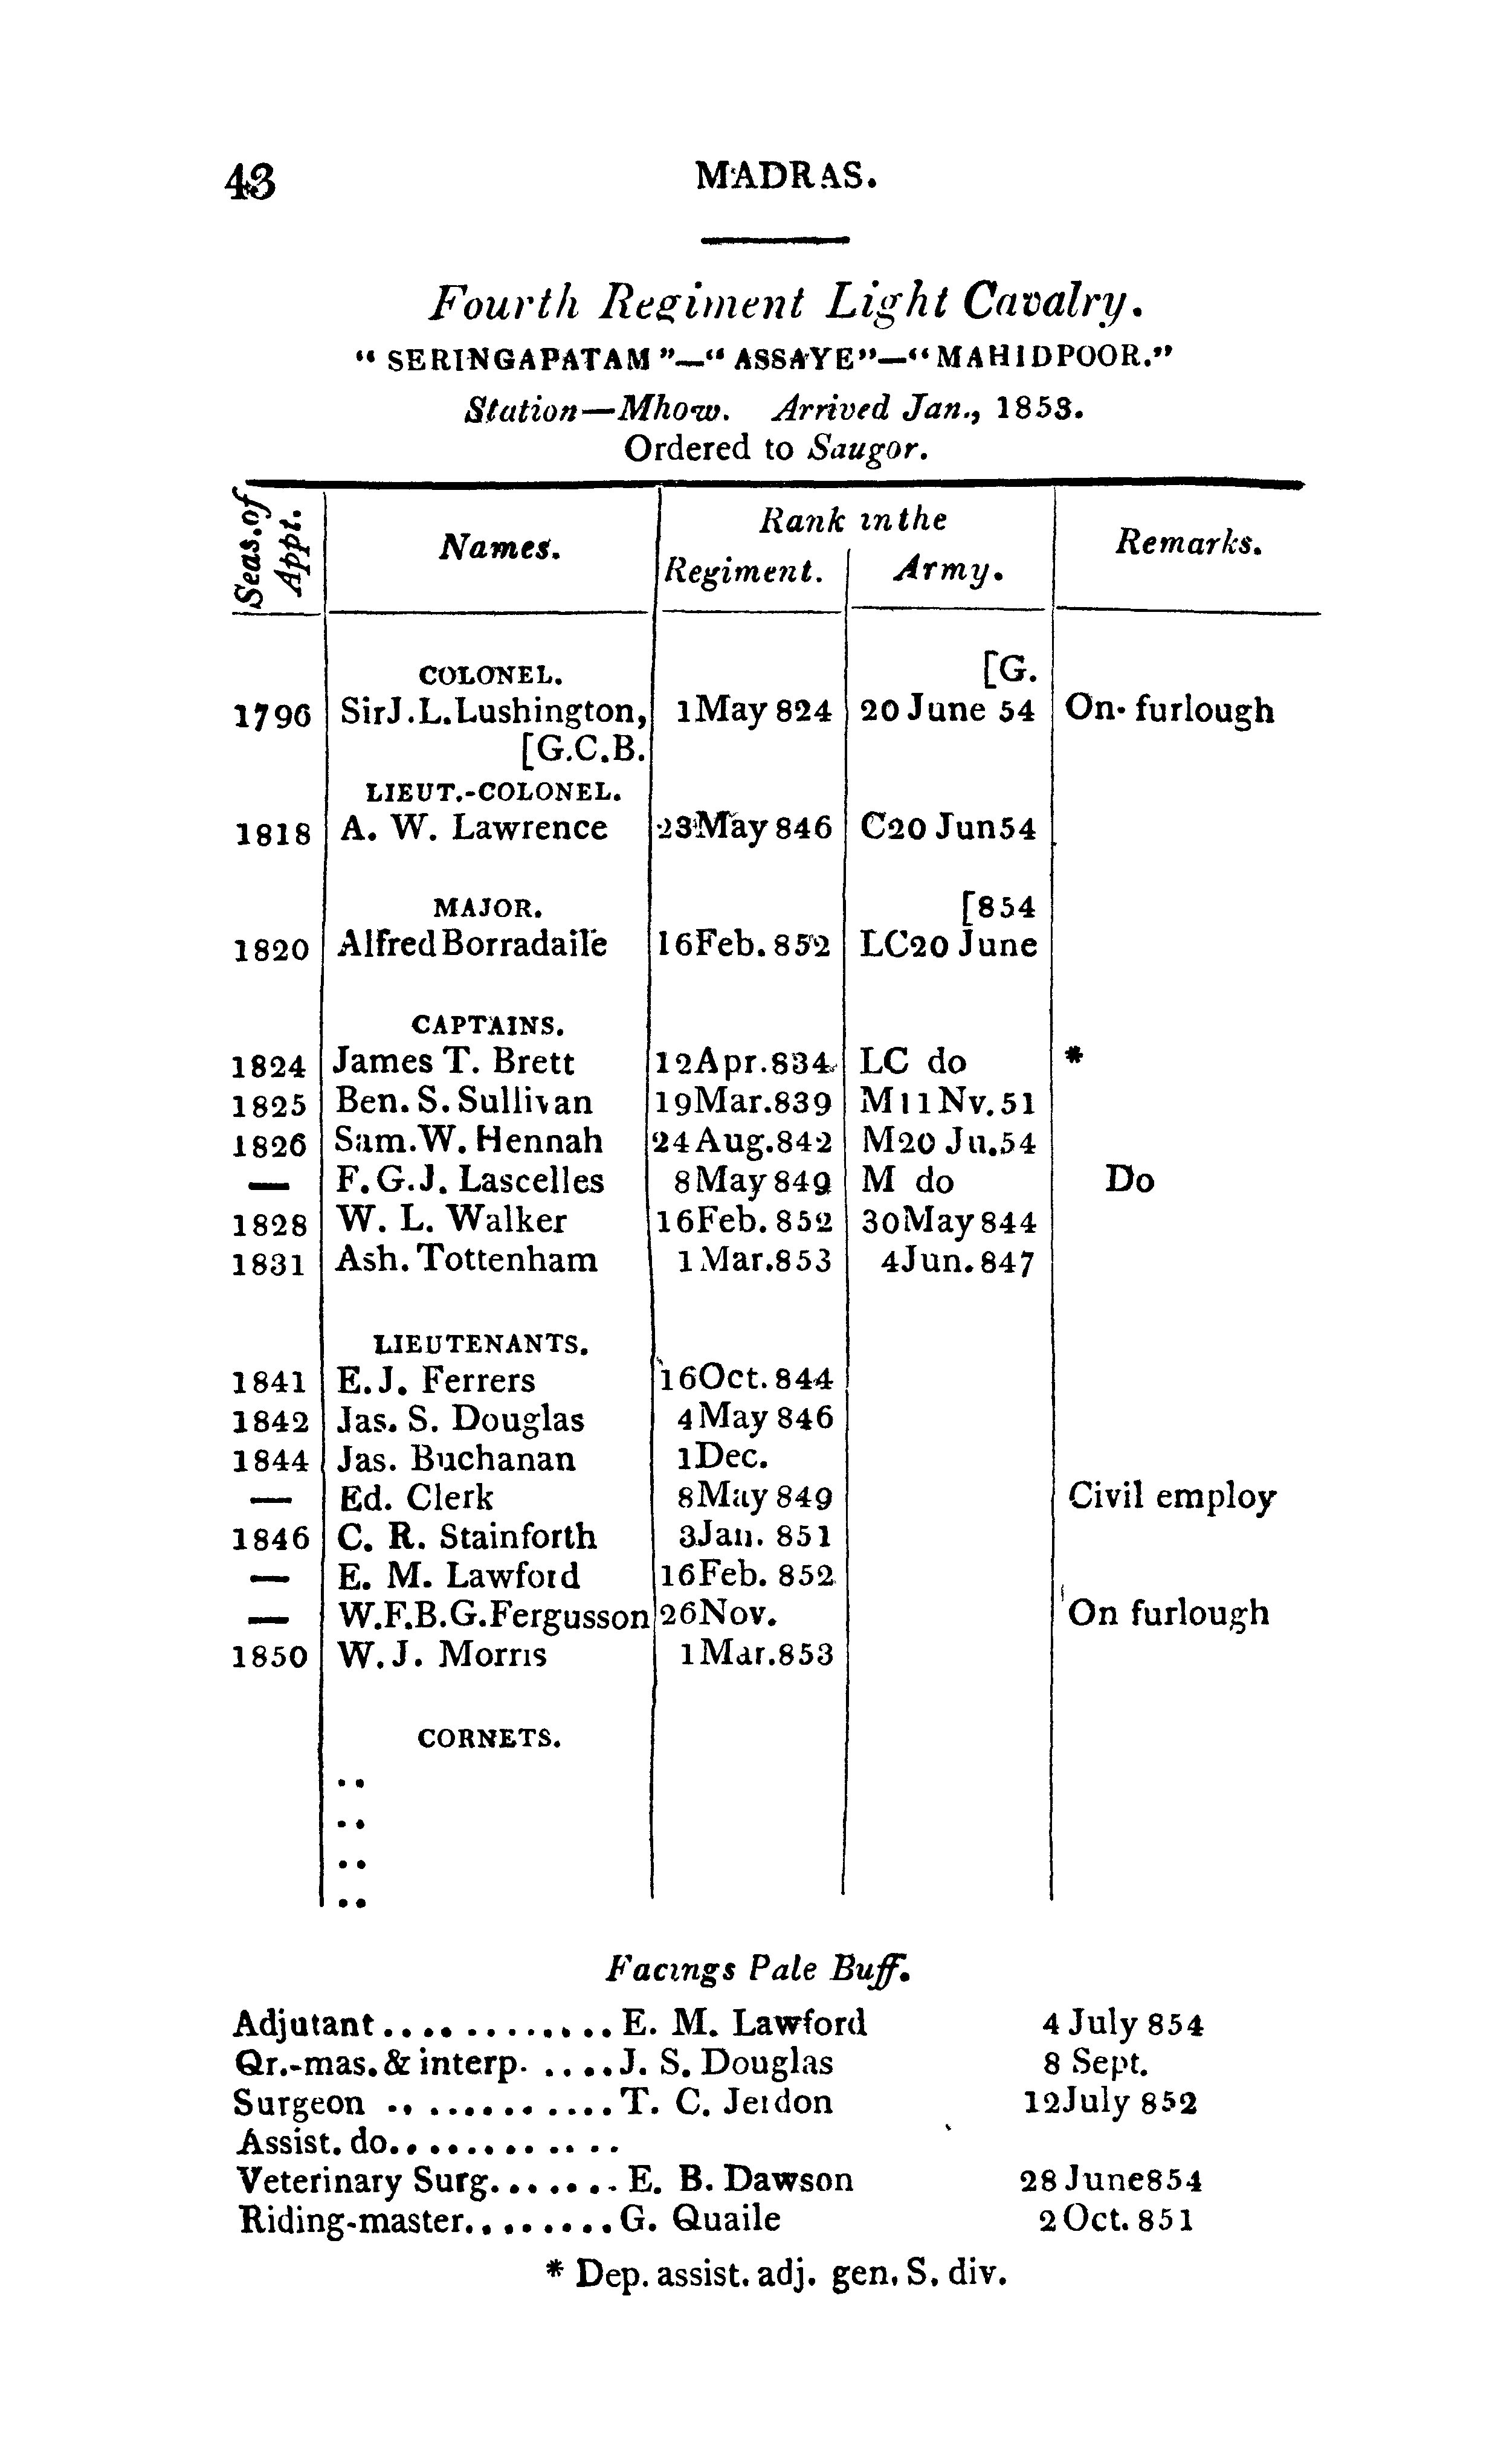 E B Dawson listed under the Madras Fourth Regiment Light Cavalry in 1855